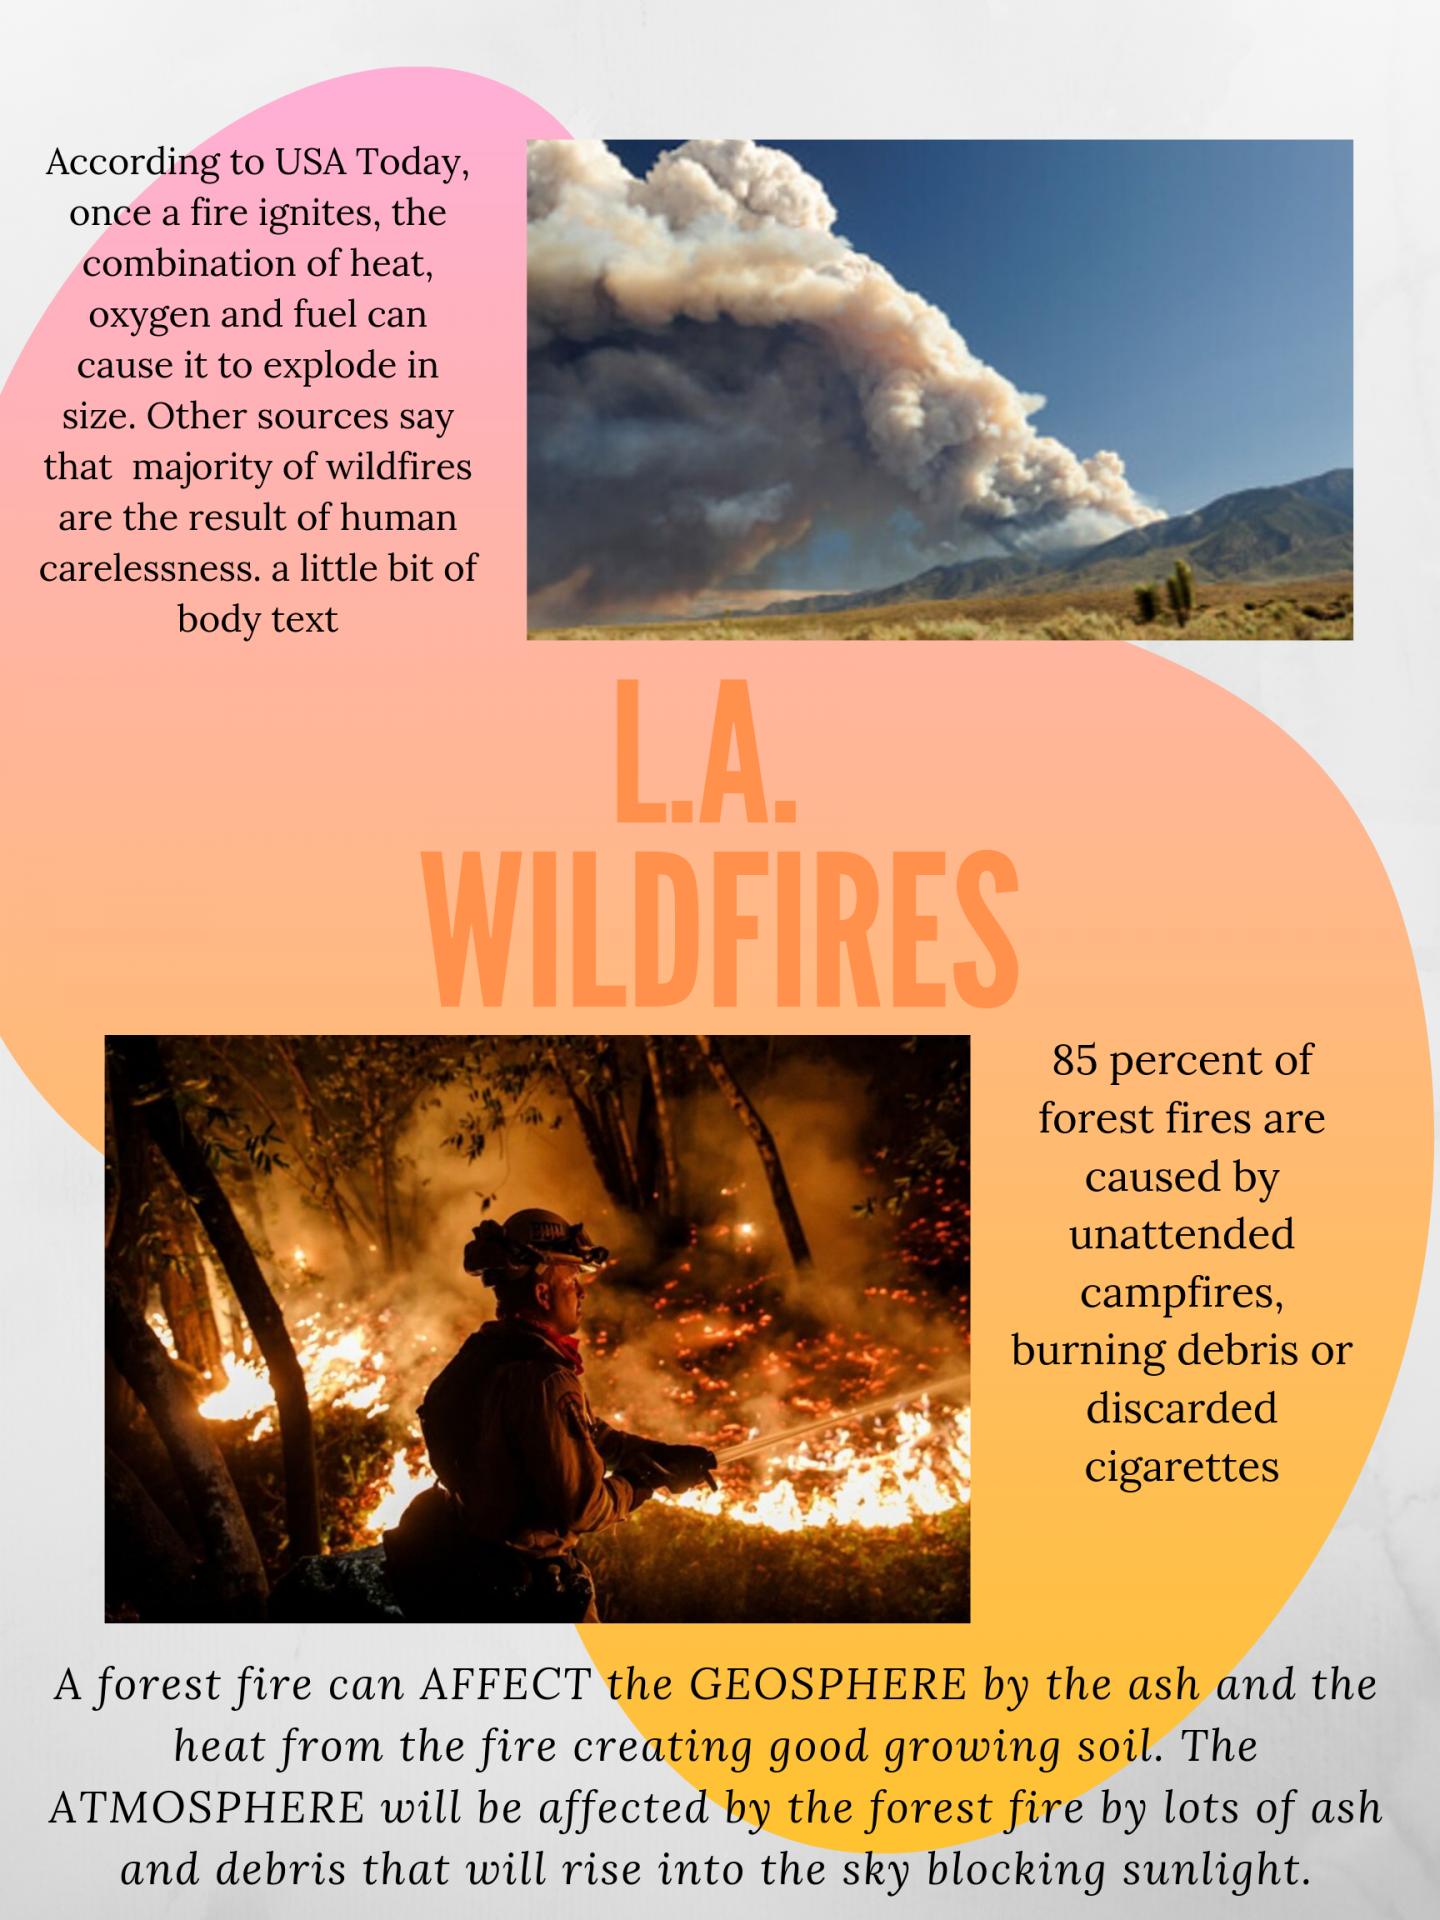 LA. Wildfires